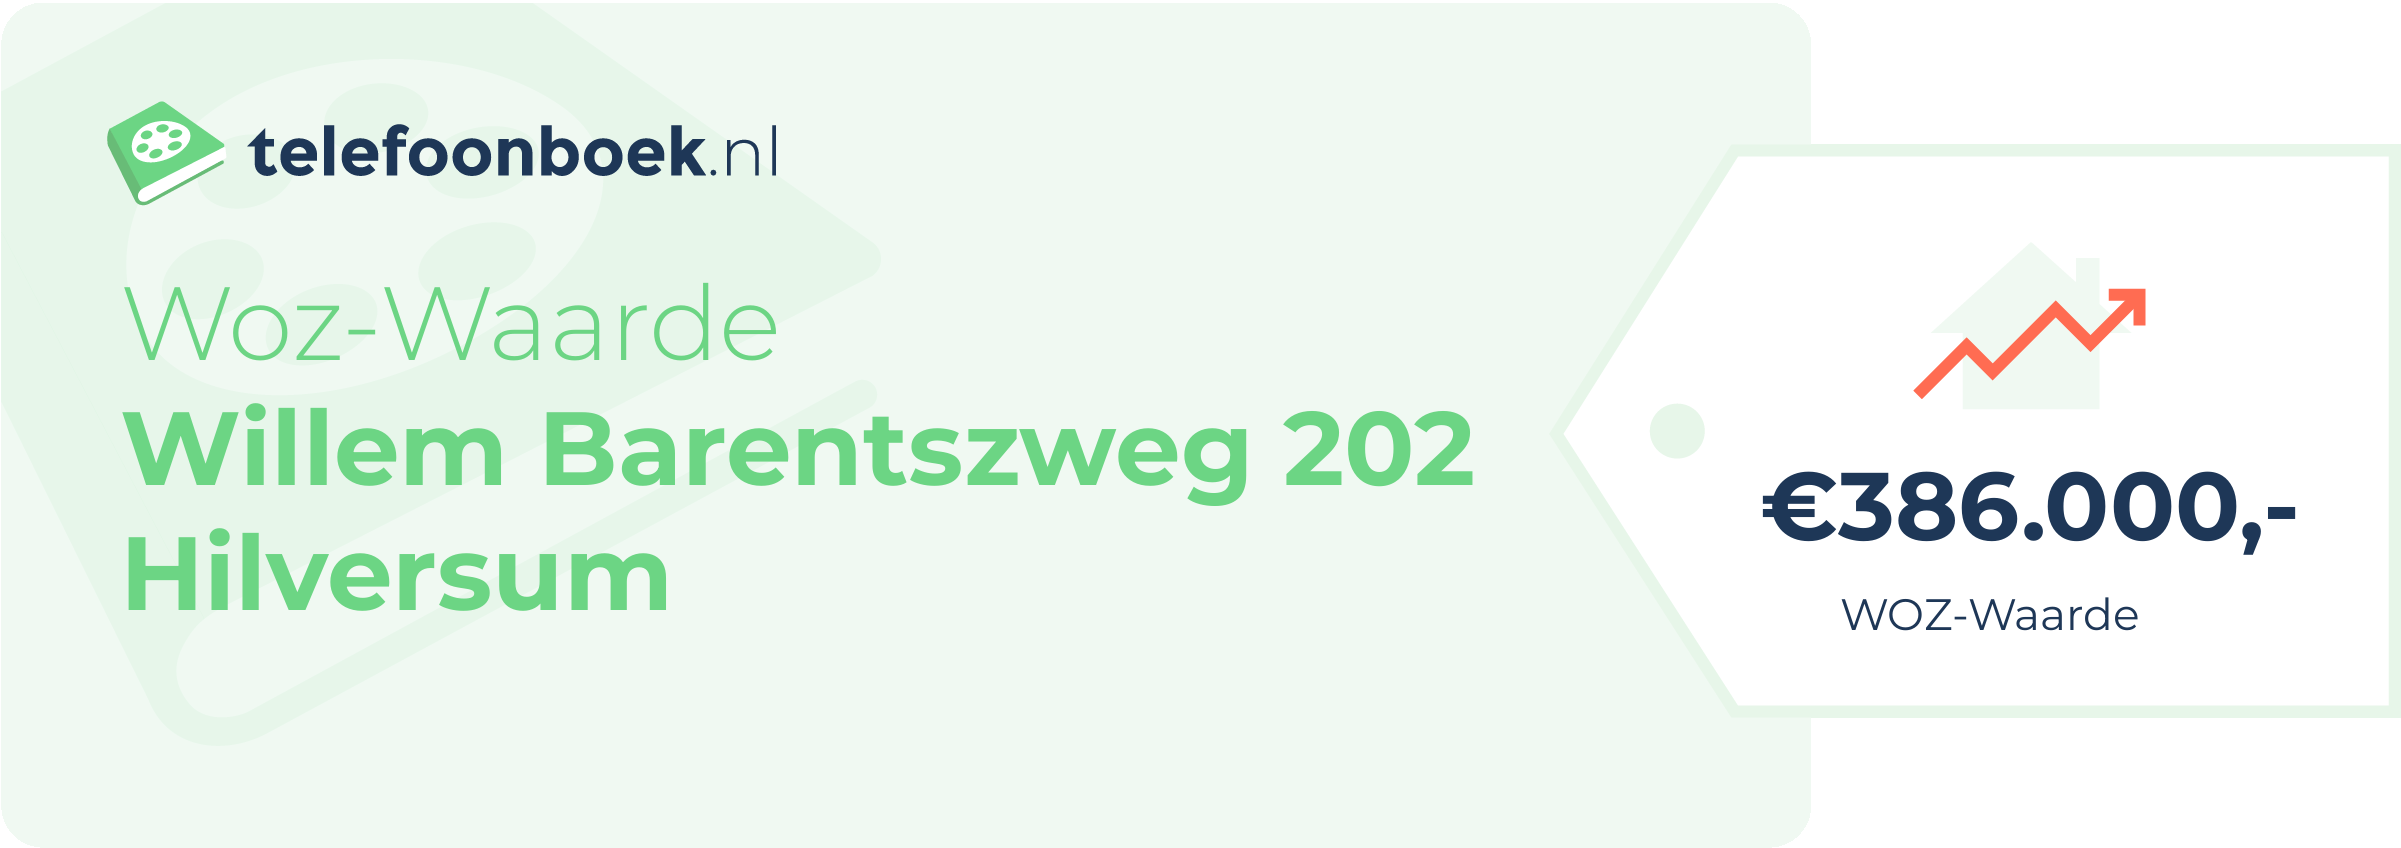 WOZ-waarde Willem Barentszweg 202 Hilversum